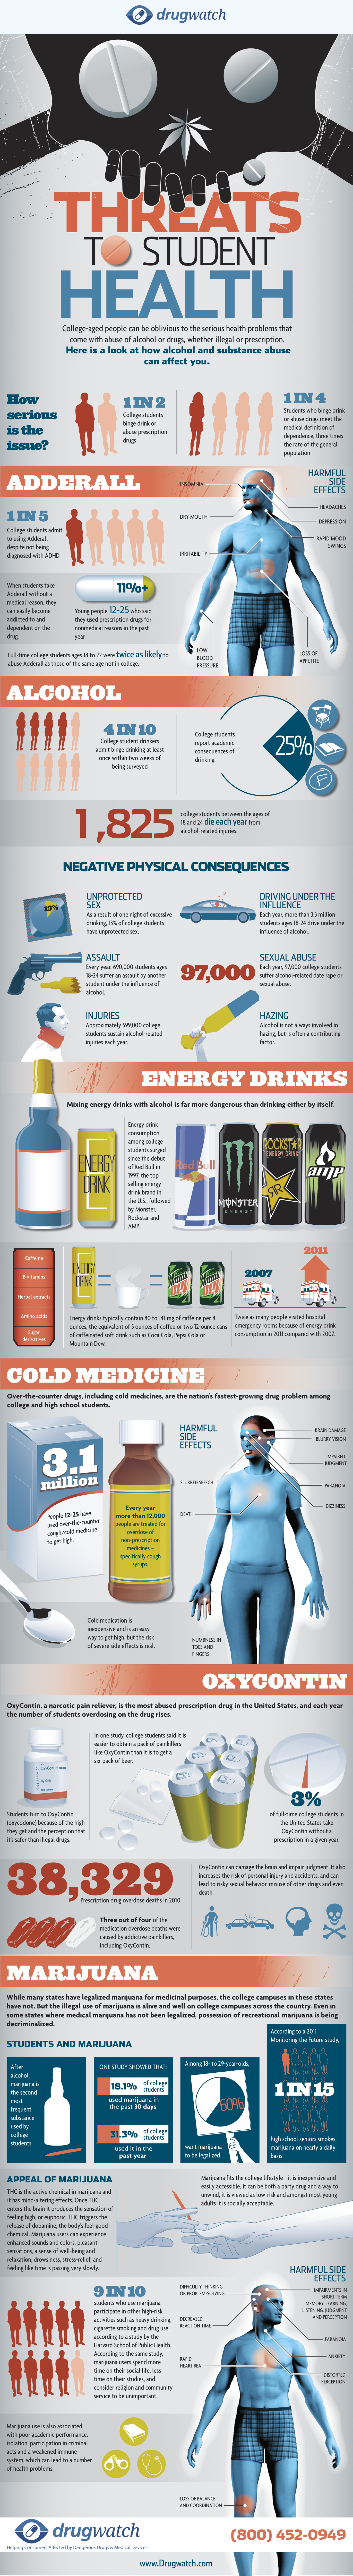 student-health-infographic